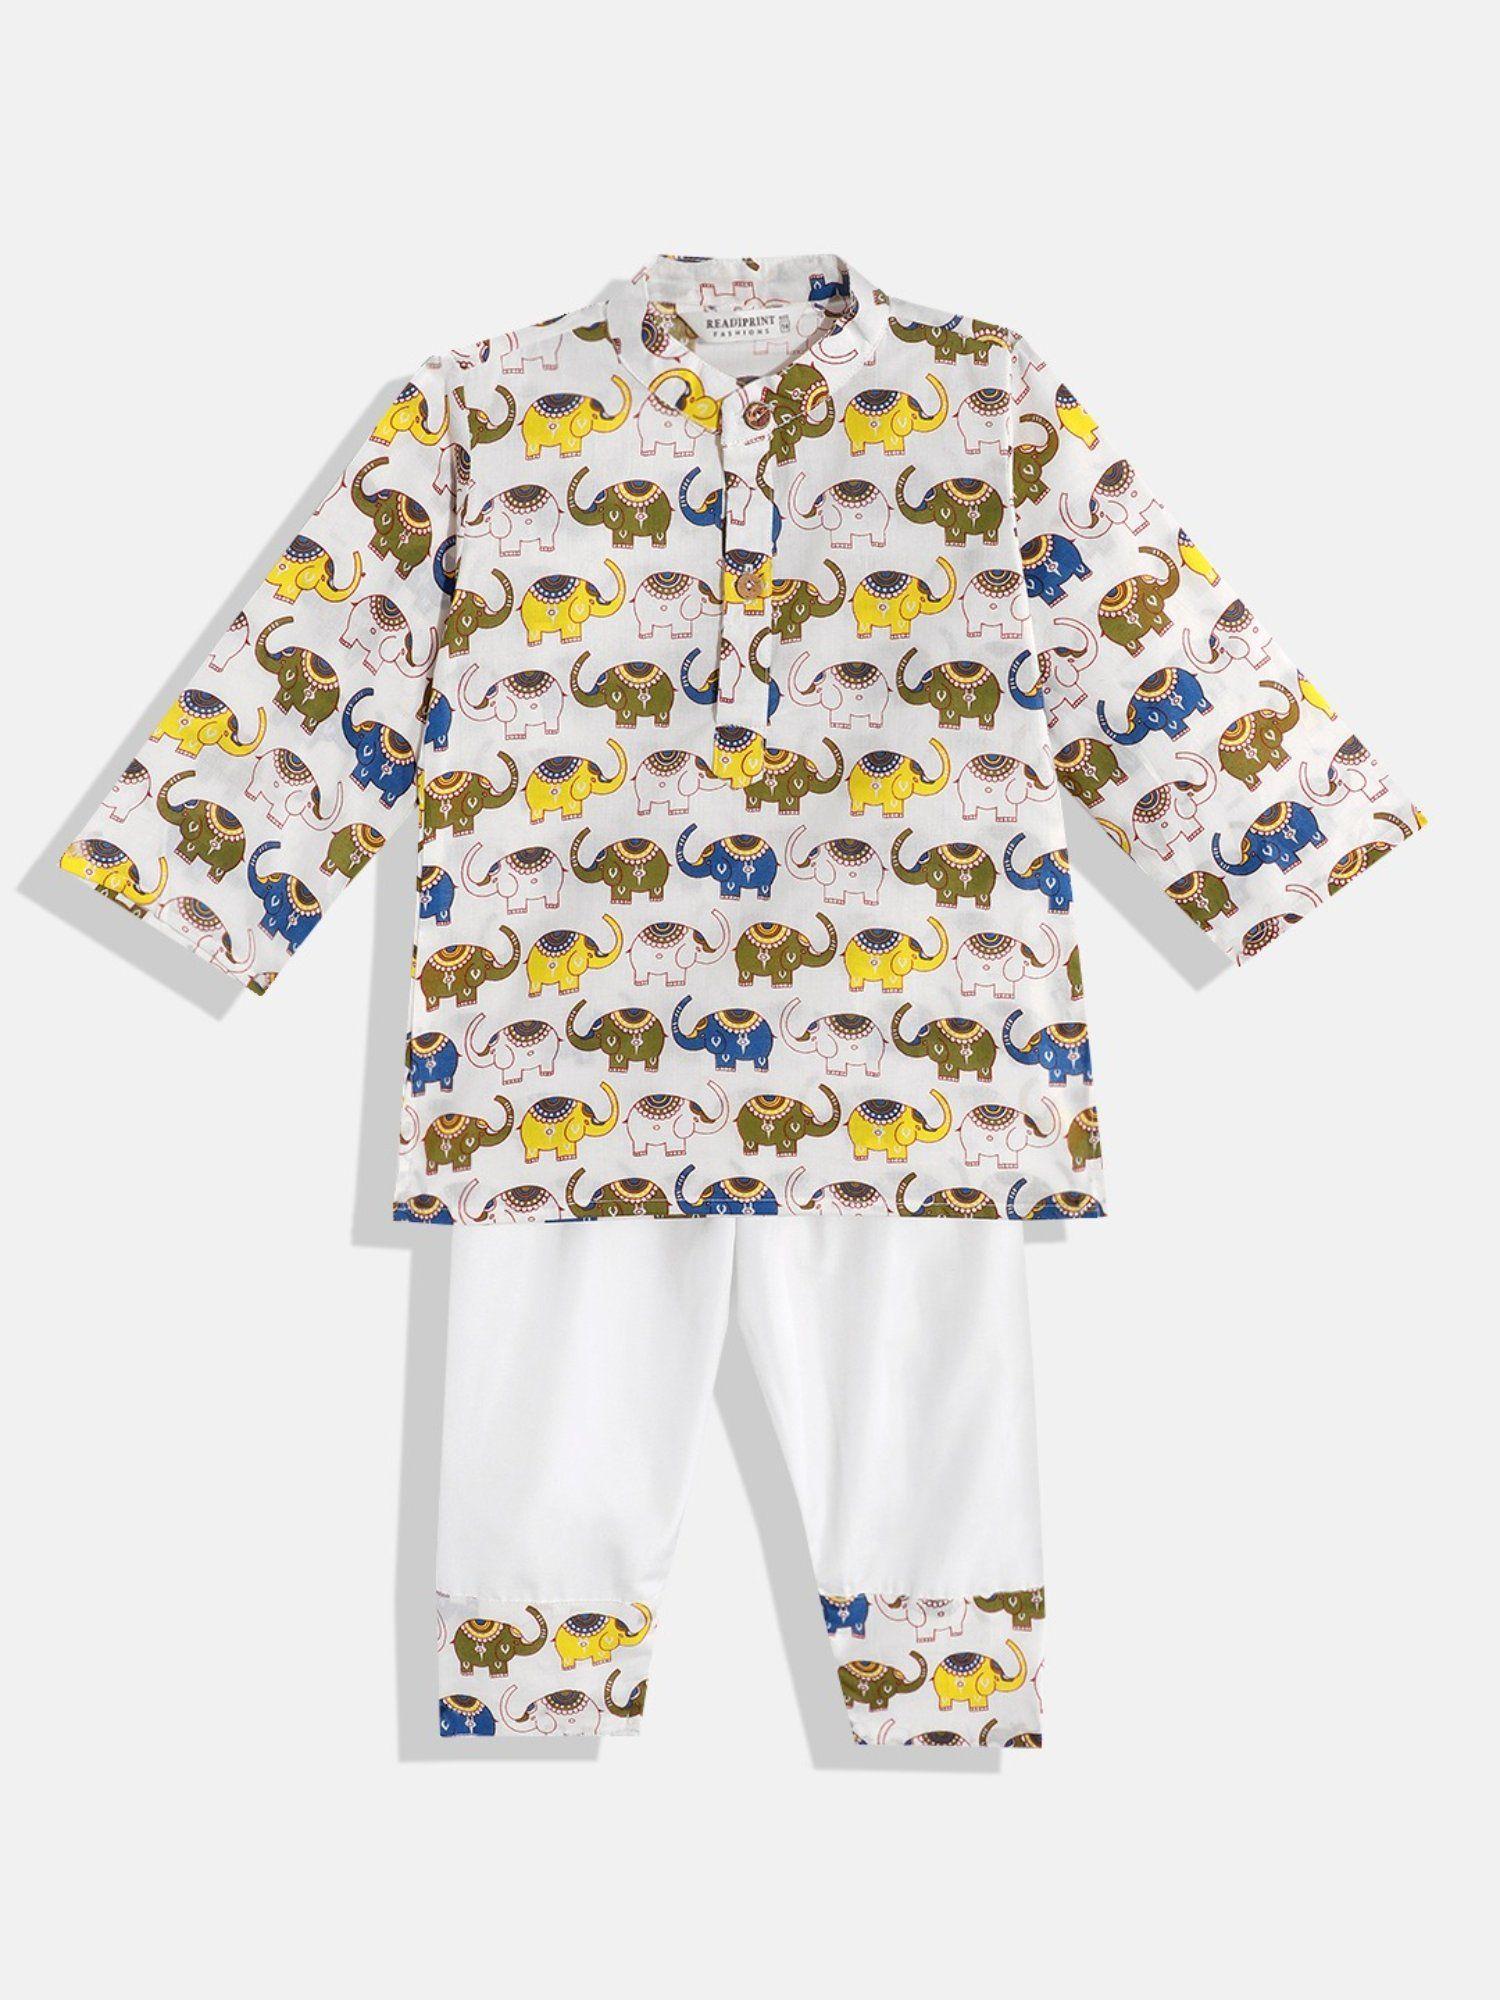 Boys White & Yellow Cotton Printed Kurta Pyjama (Set of 2)